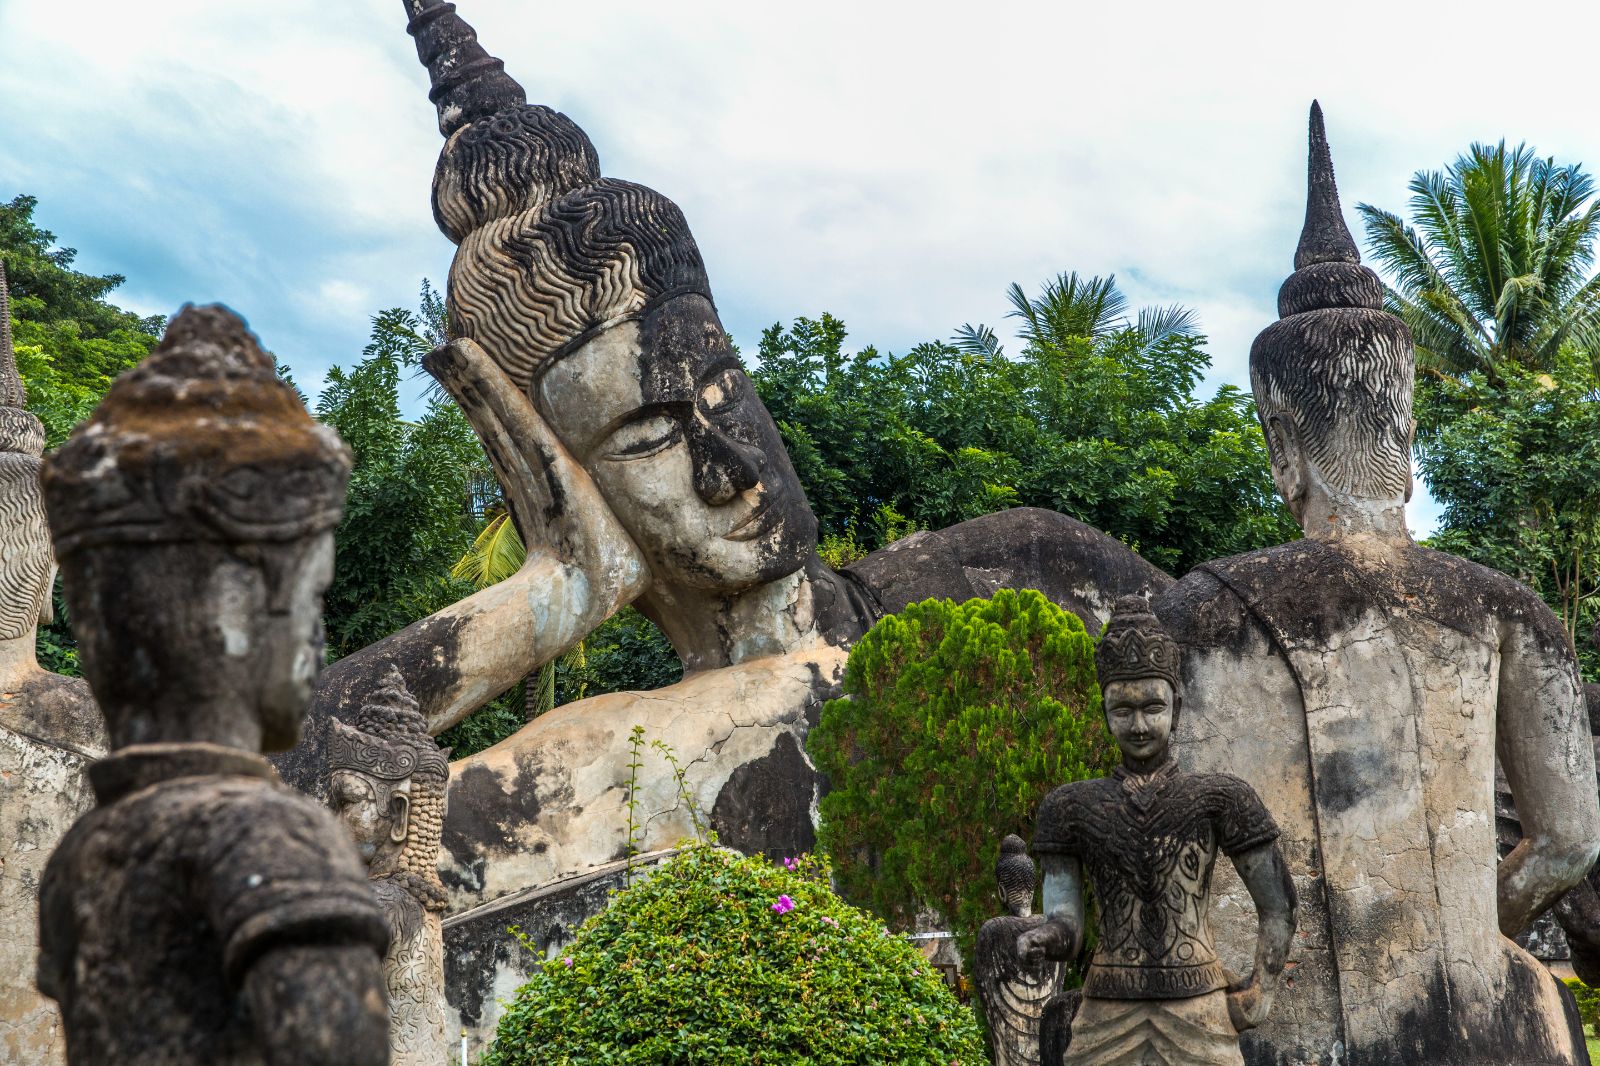 Large stone Buddha statues in Laos